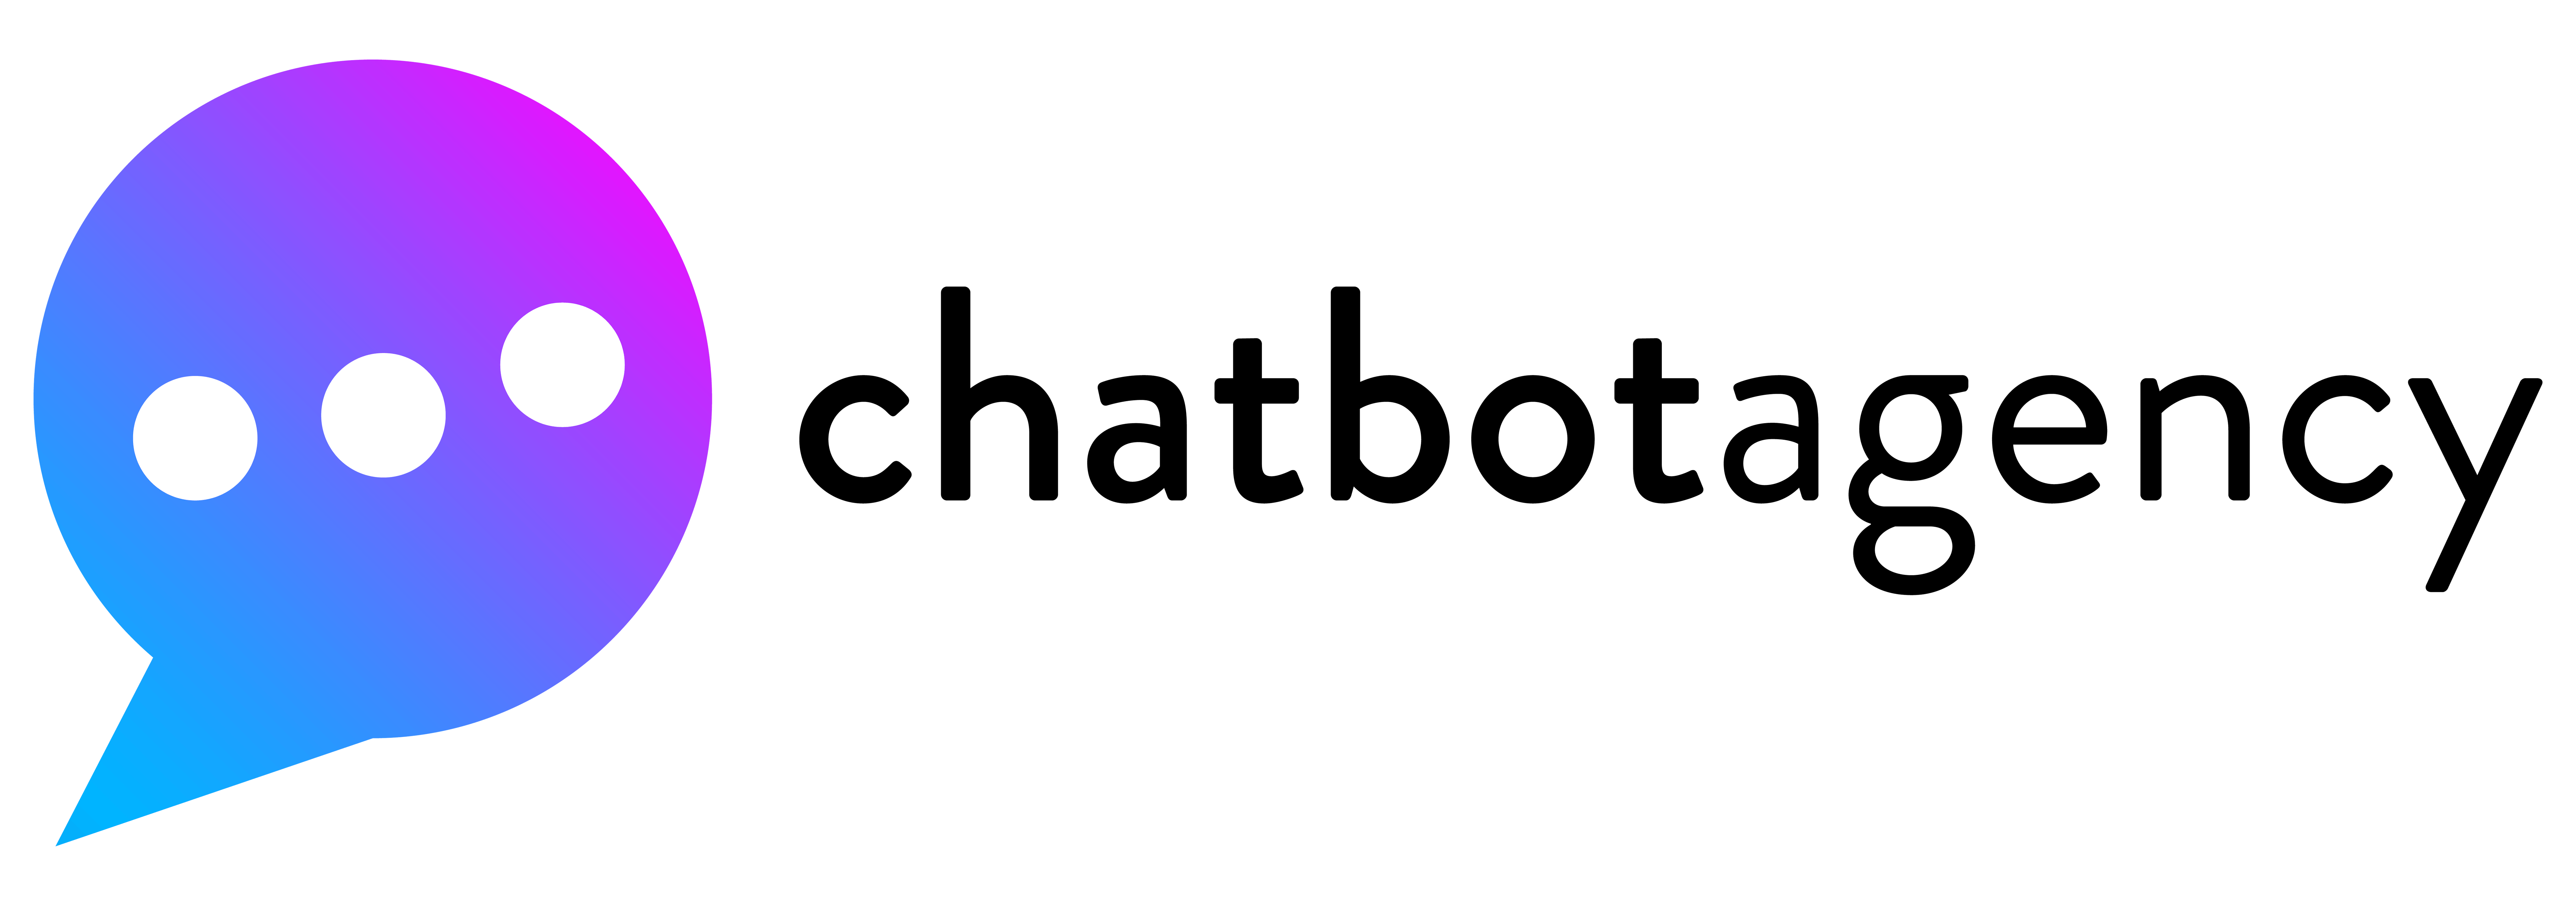 Original Chatbot Agency